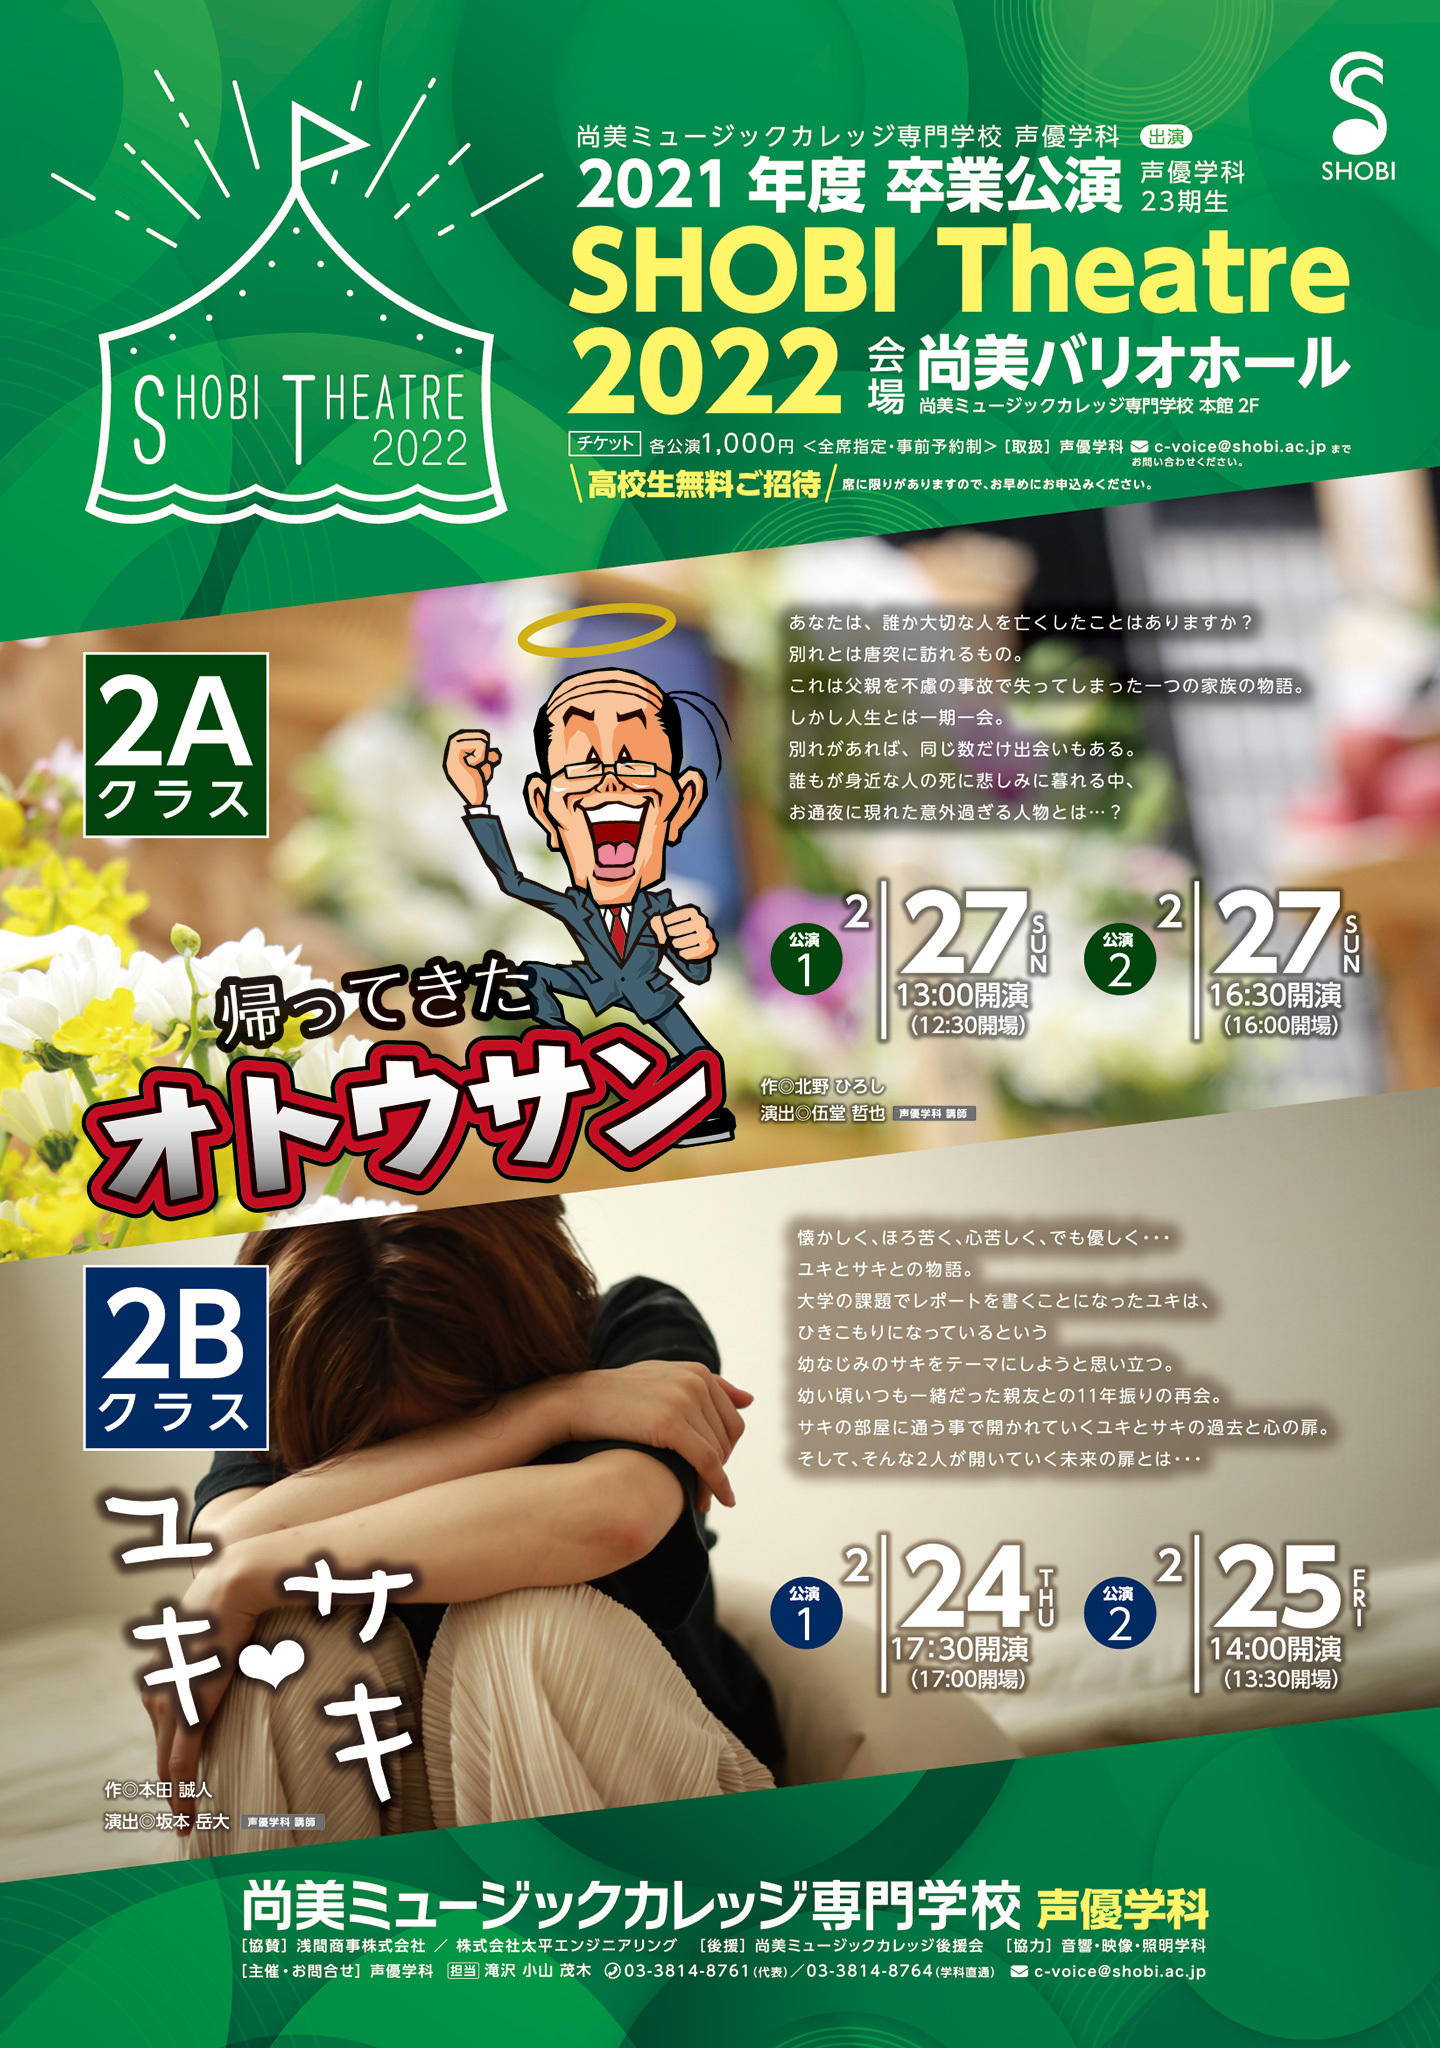 https://www.shobi.ac.jp/event/20220224-0227_va_shobi-theatre_01.jpg